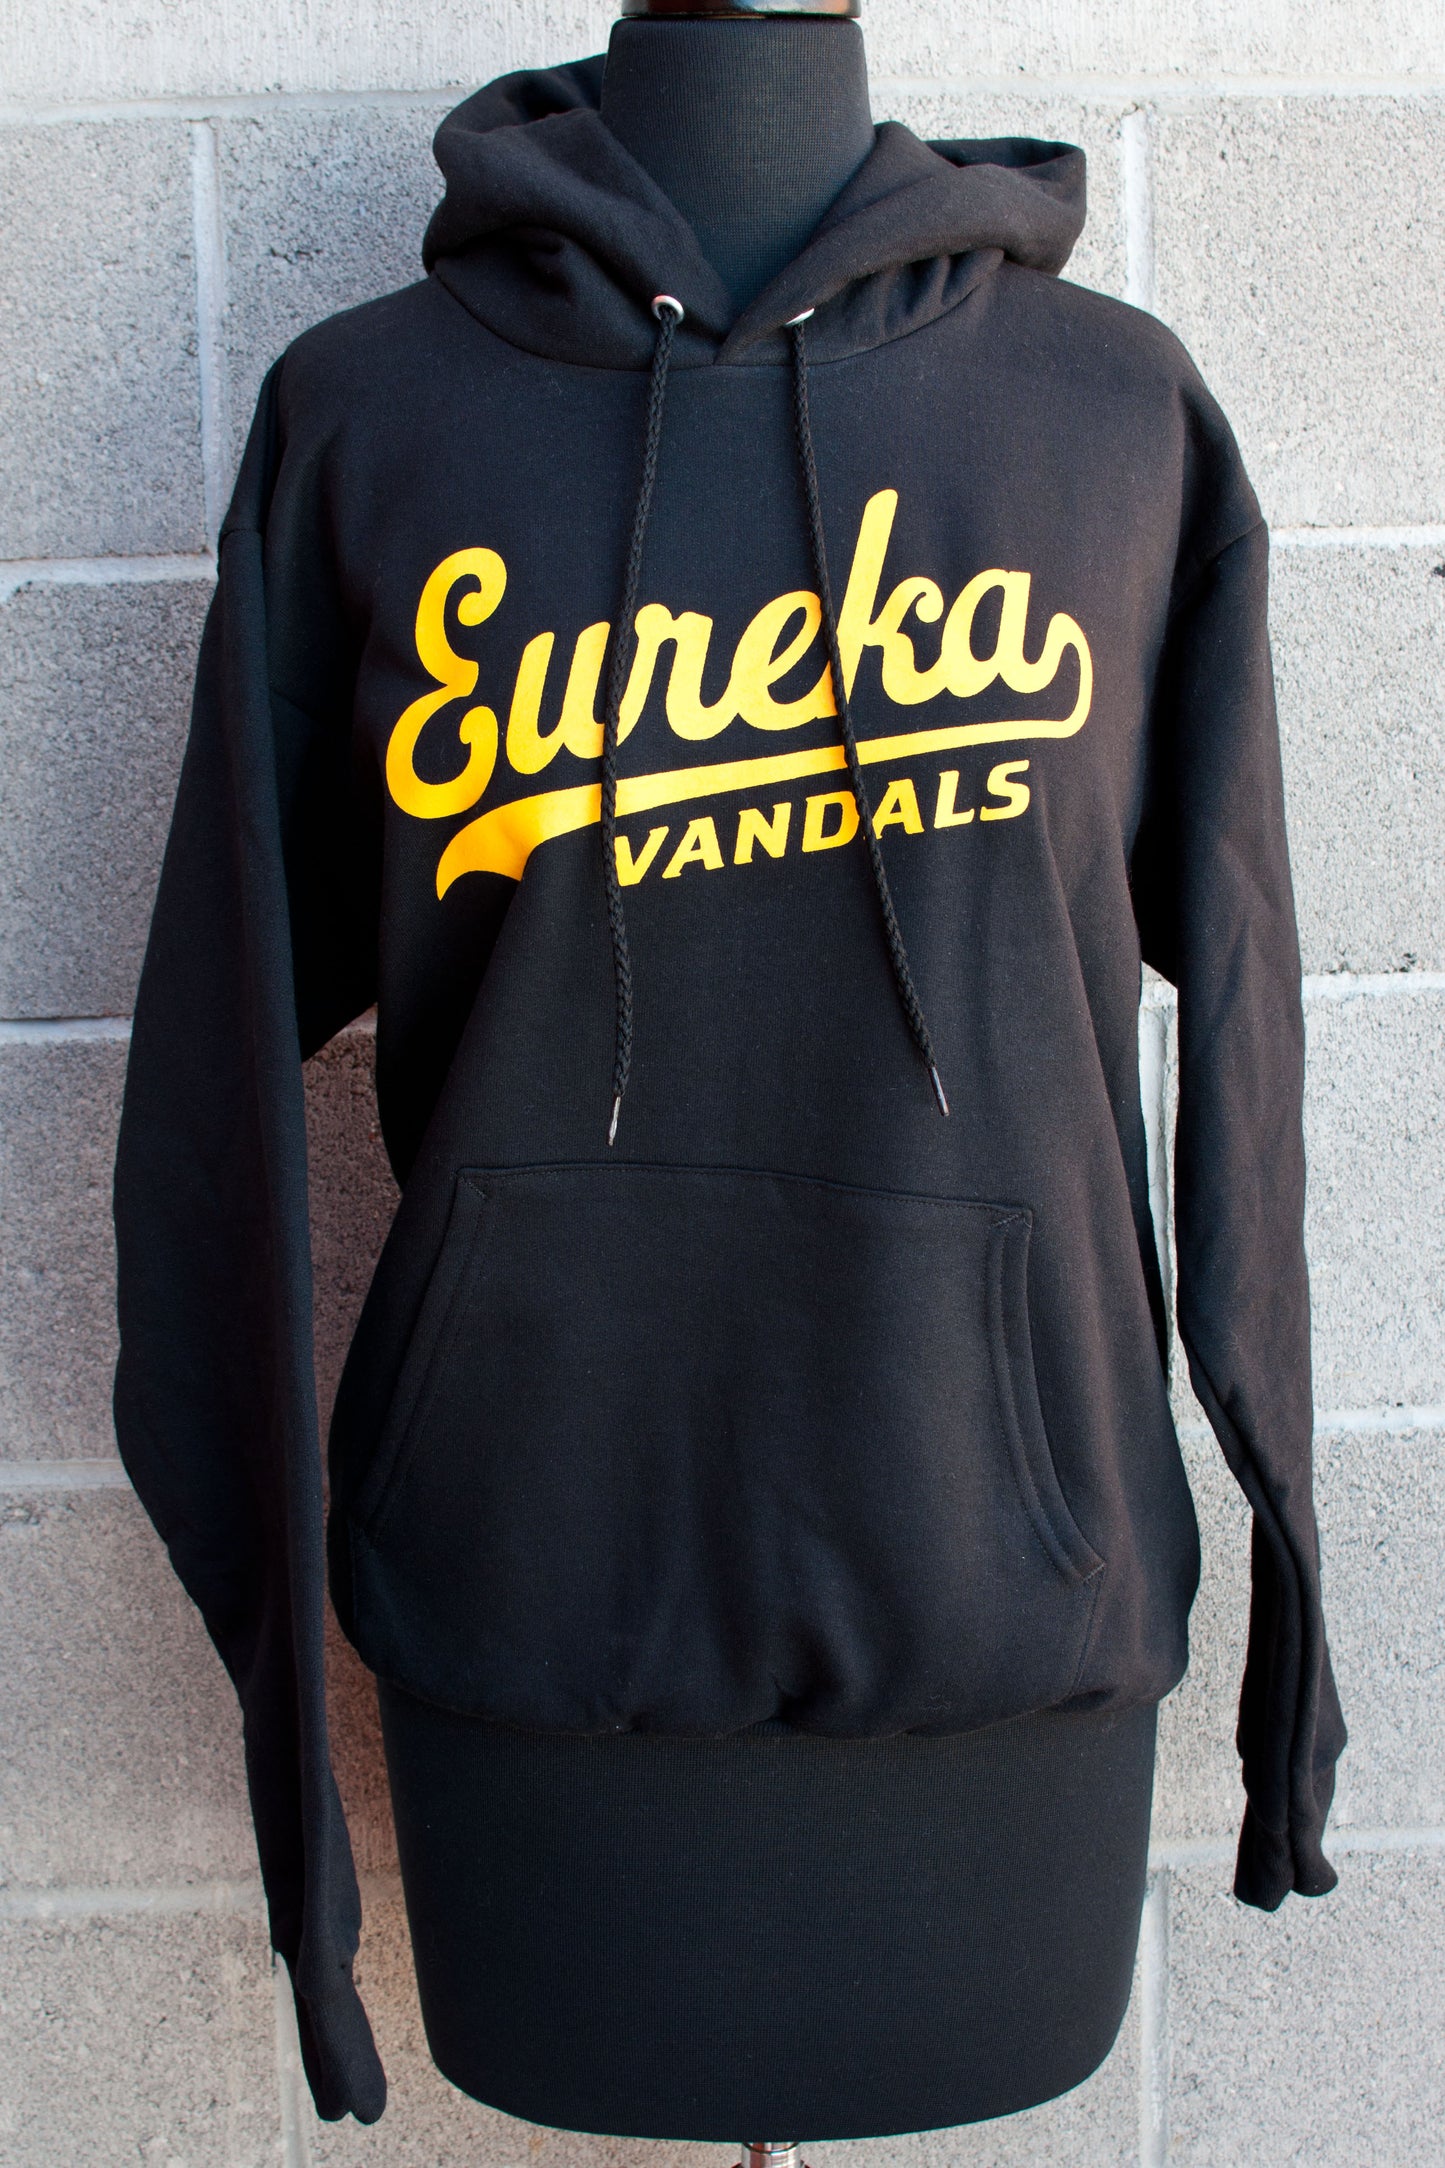 Black Hooded Sweatshirt with Gold Eureka Vandals design - Adult